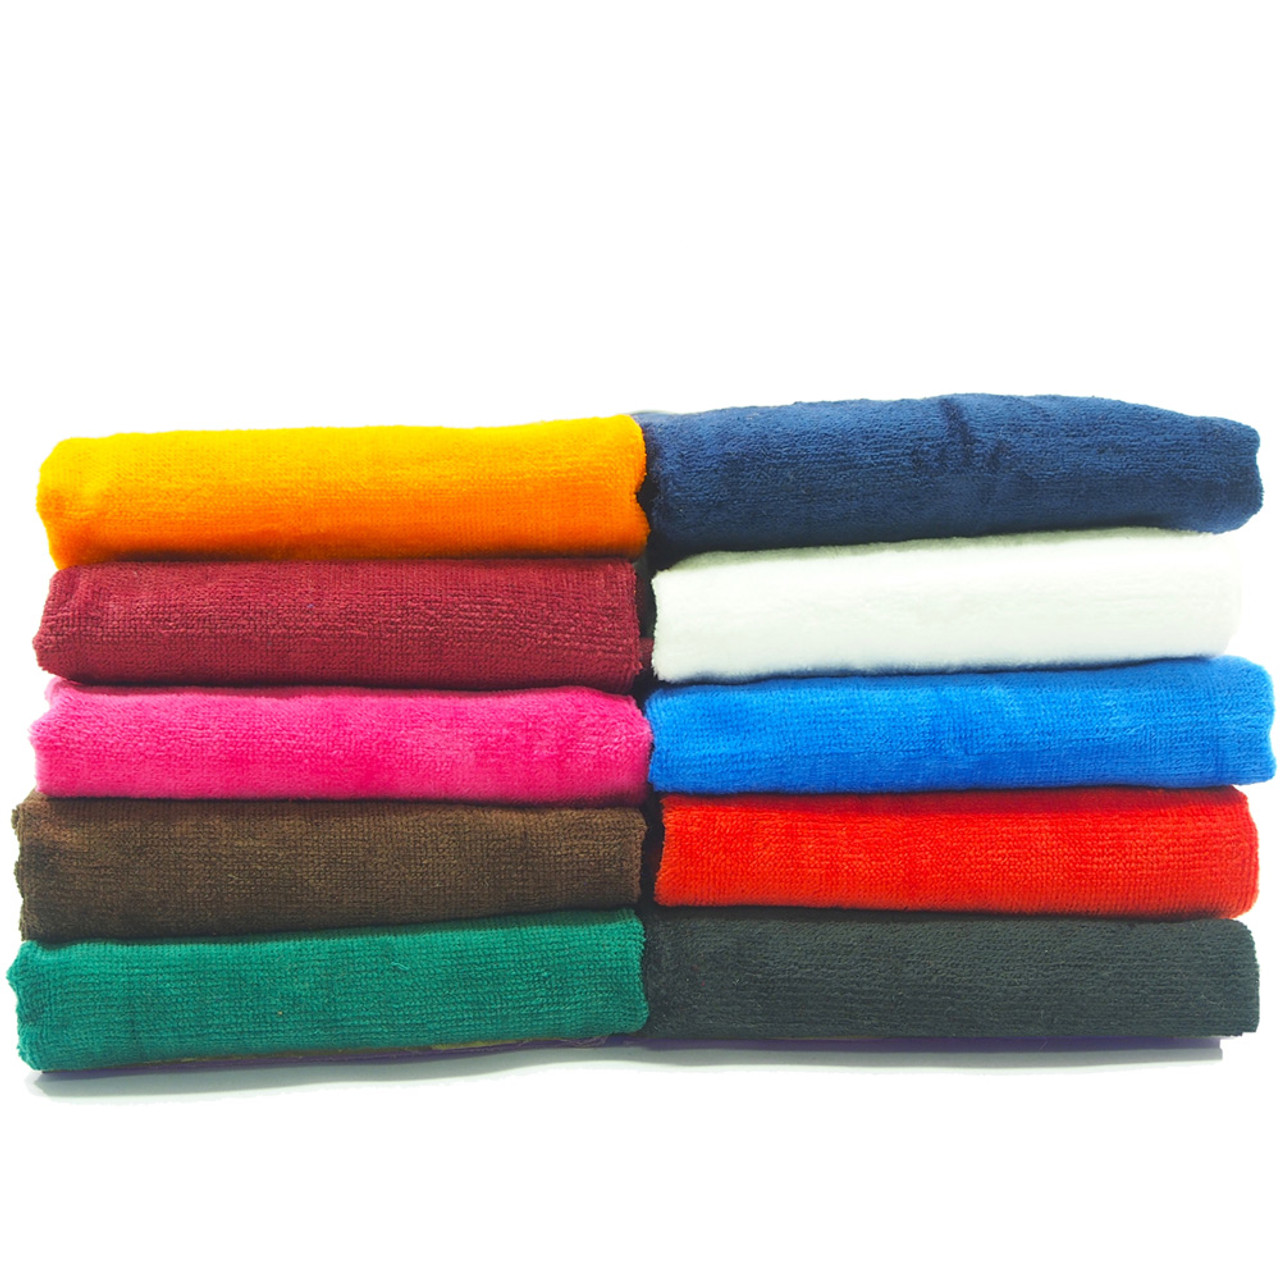 Terry Cloth Towels, 1 Dozen